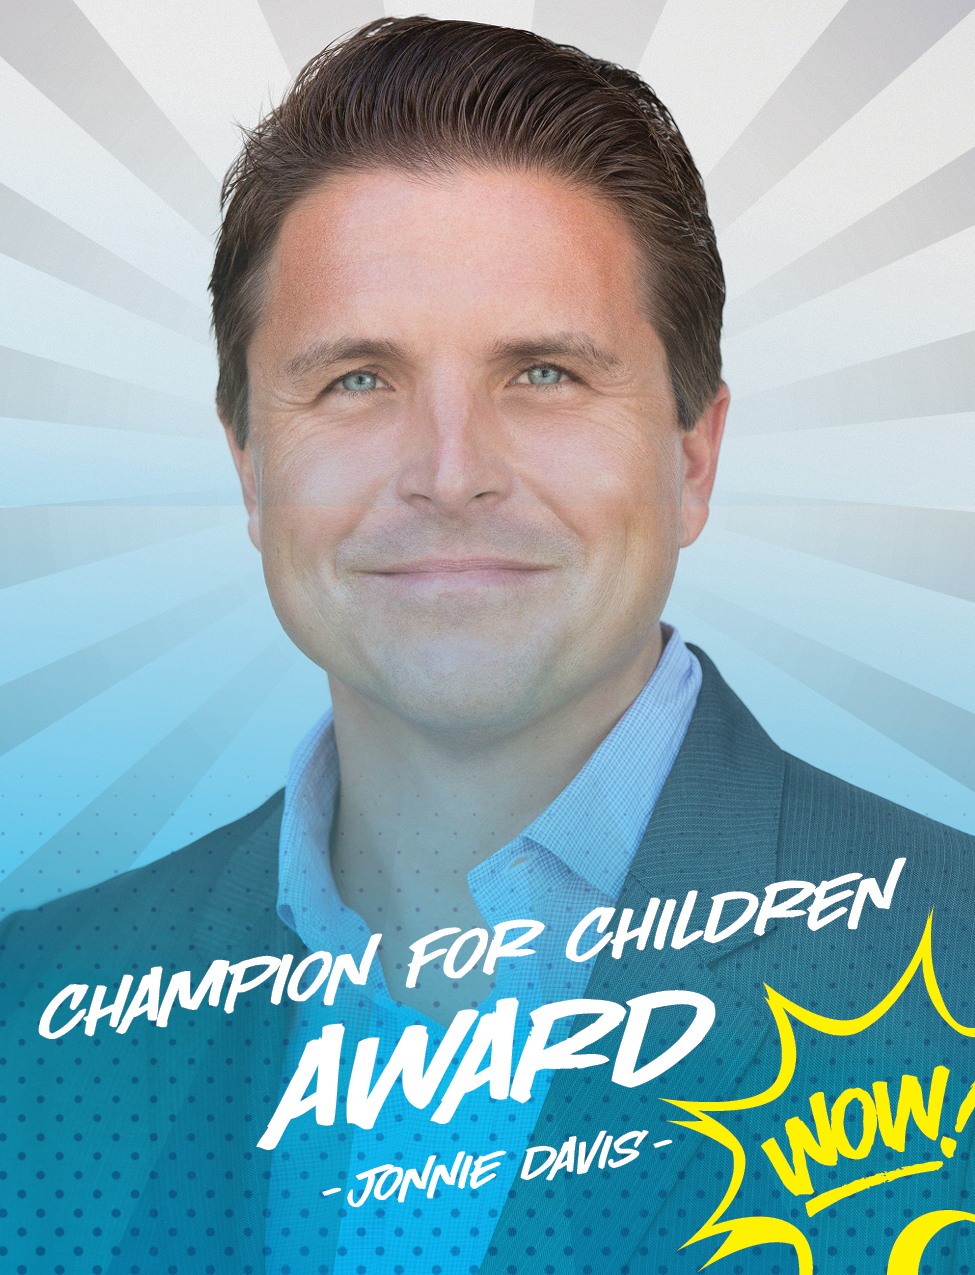 Champion for Childrewn Award: Jonnie Davis